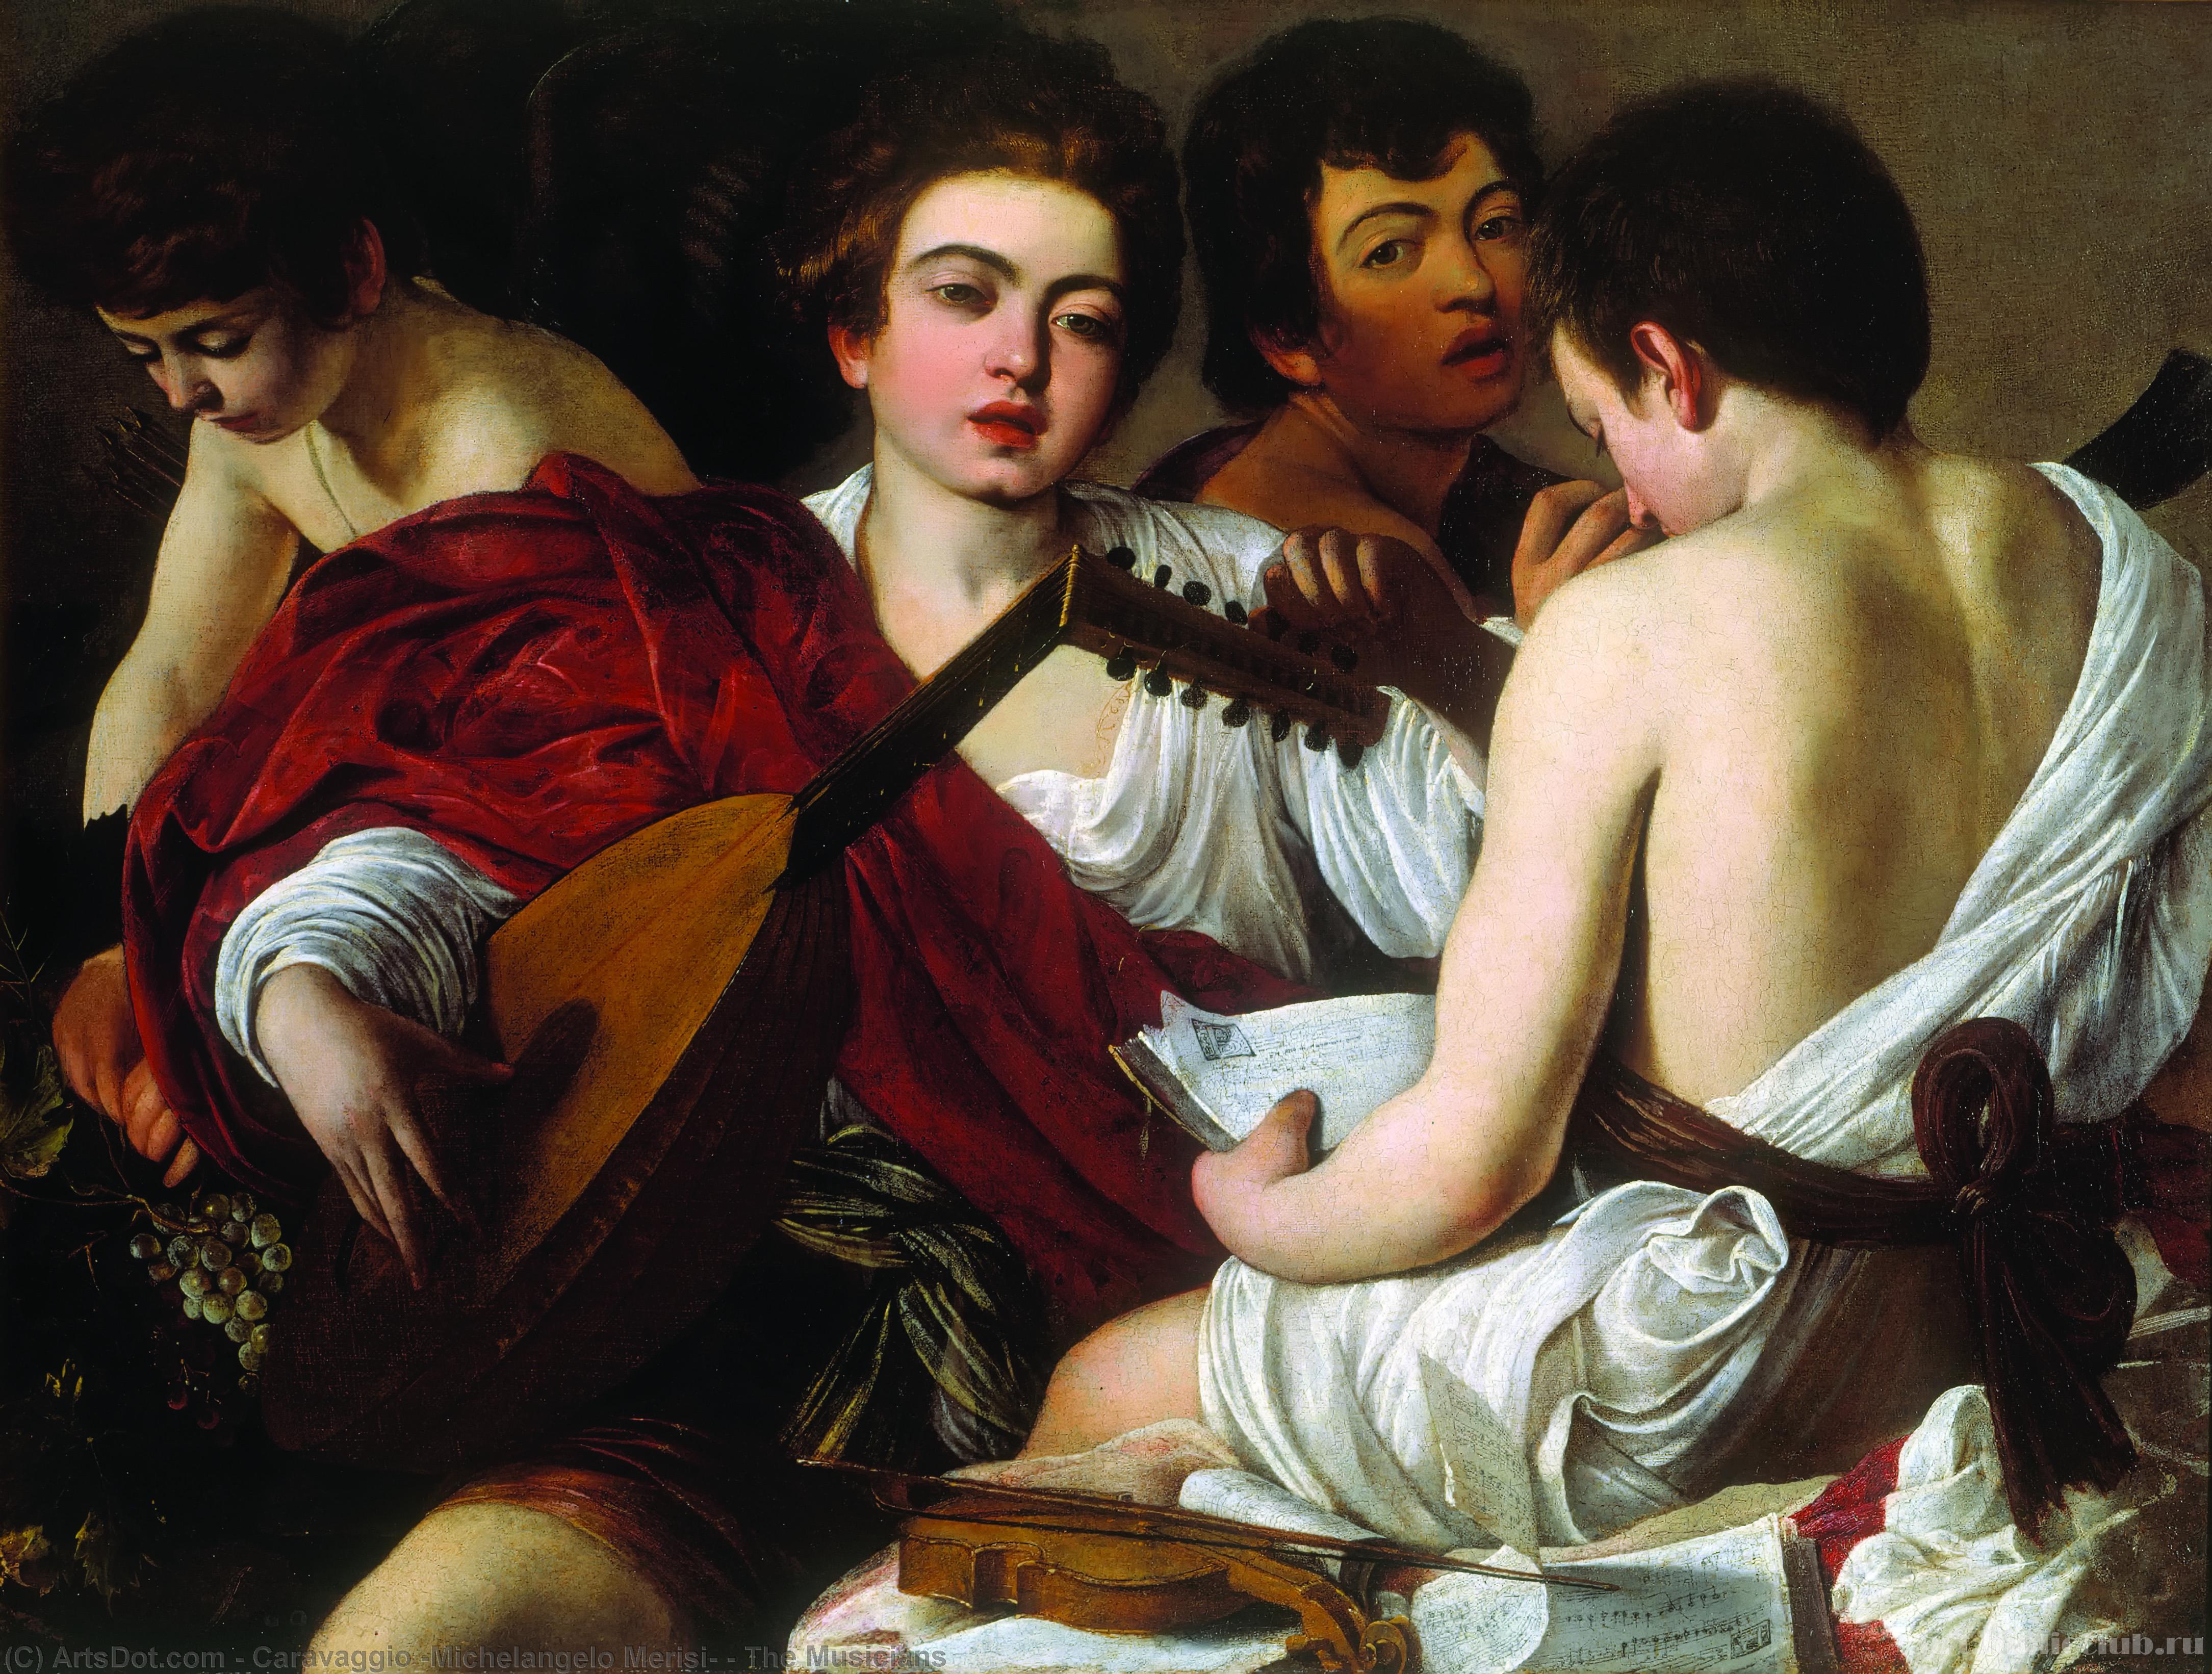 The Musicians - Caravaggio (Michelangelo Merisi)